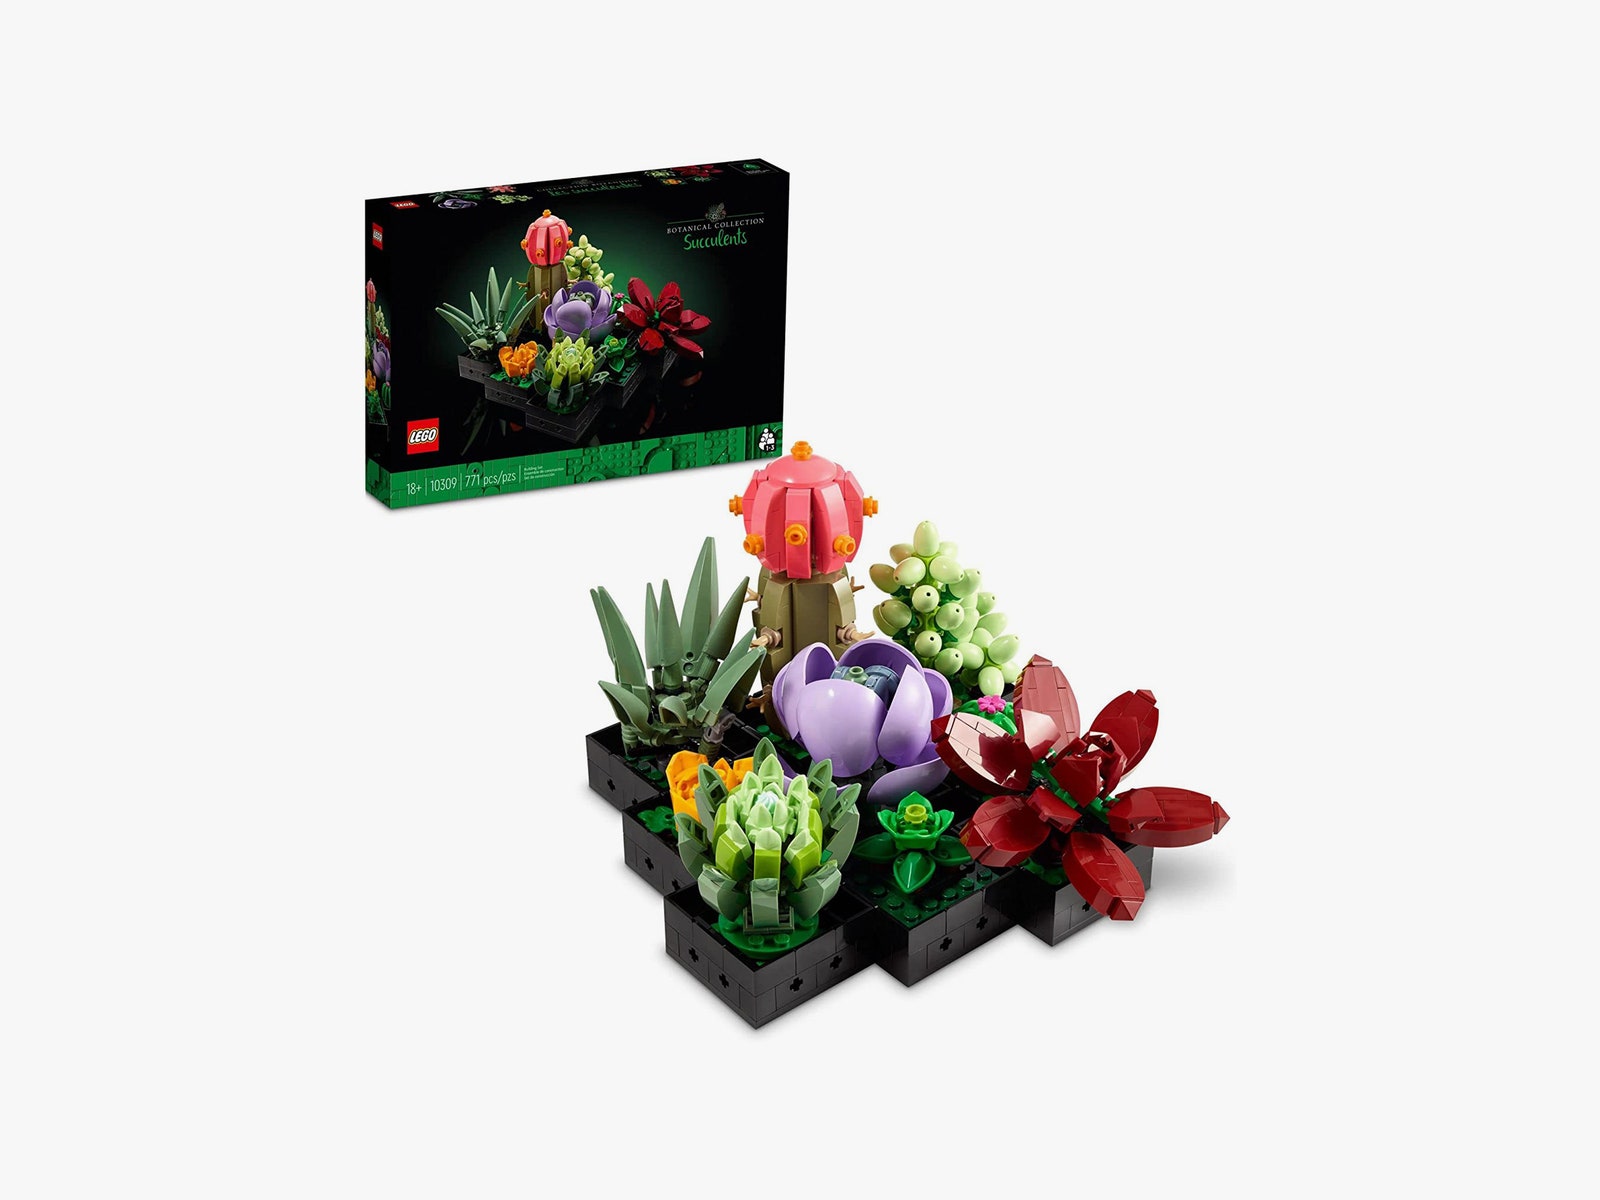 LEGO Icons Succulents